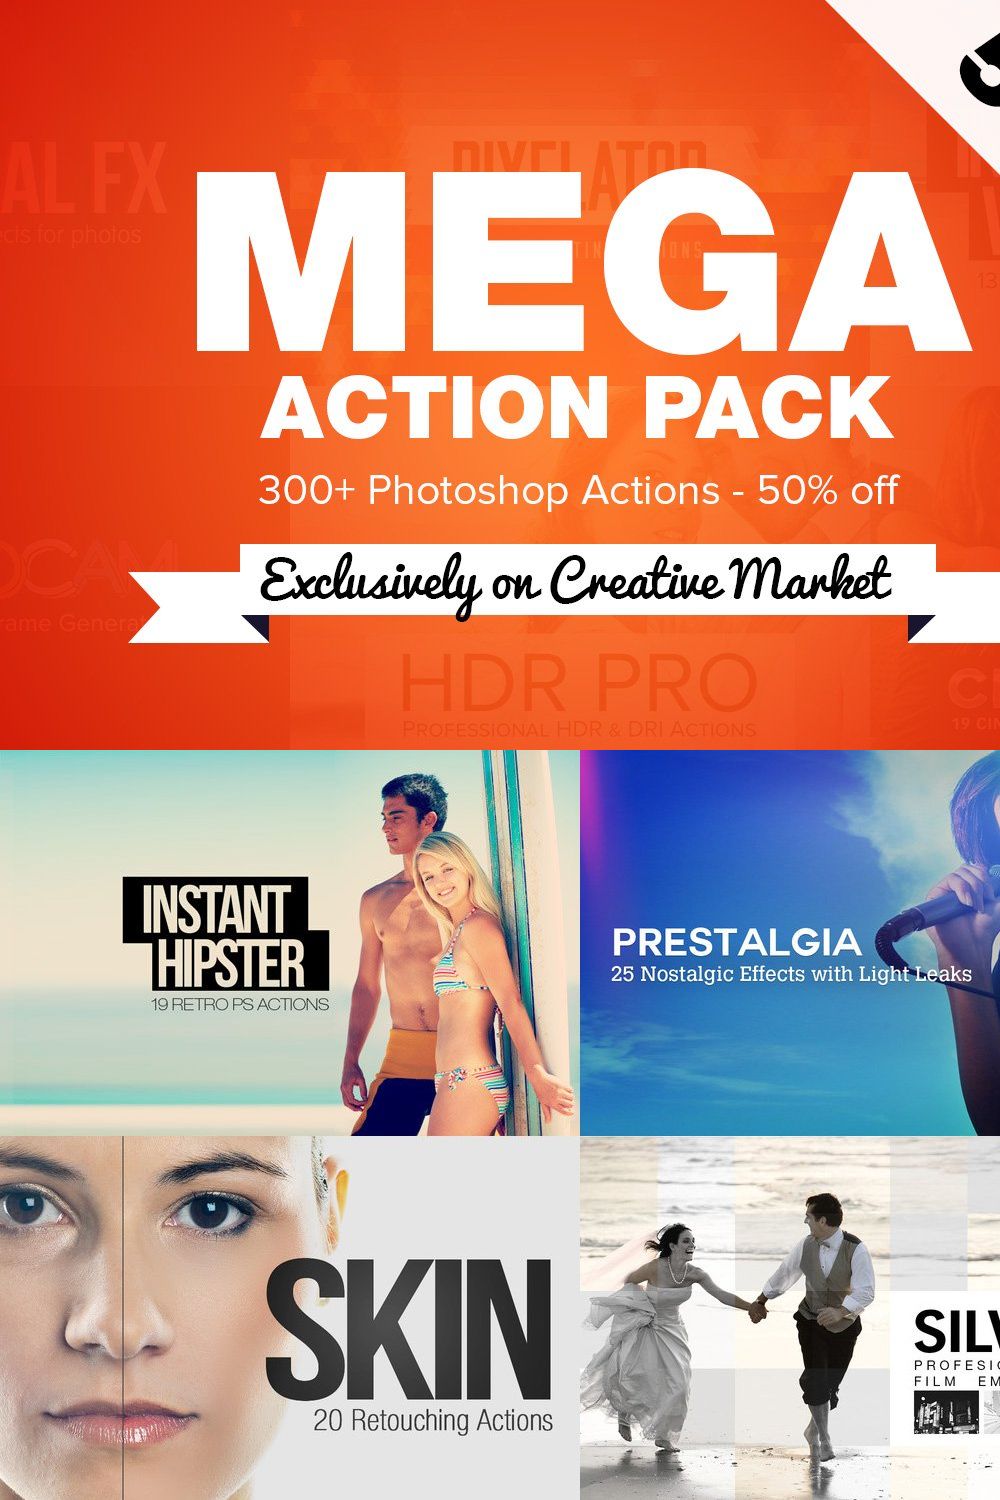 Mega 300+ Action Pack pinterest preview image.